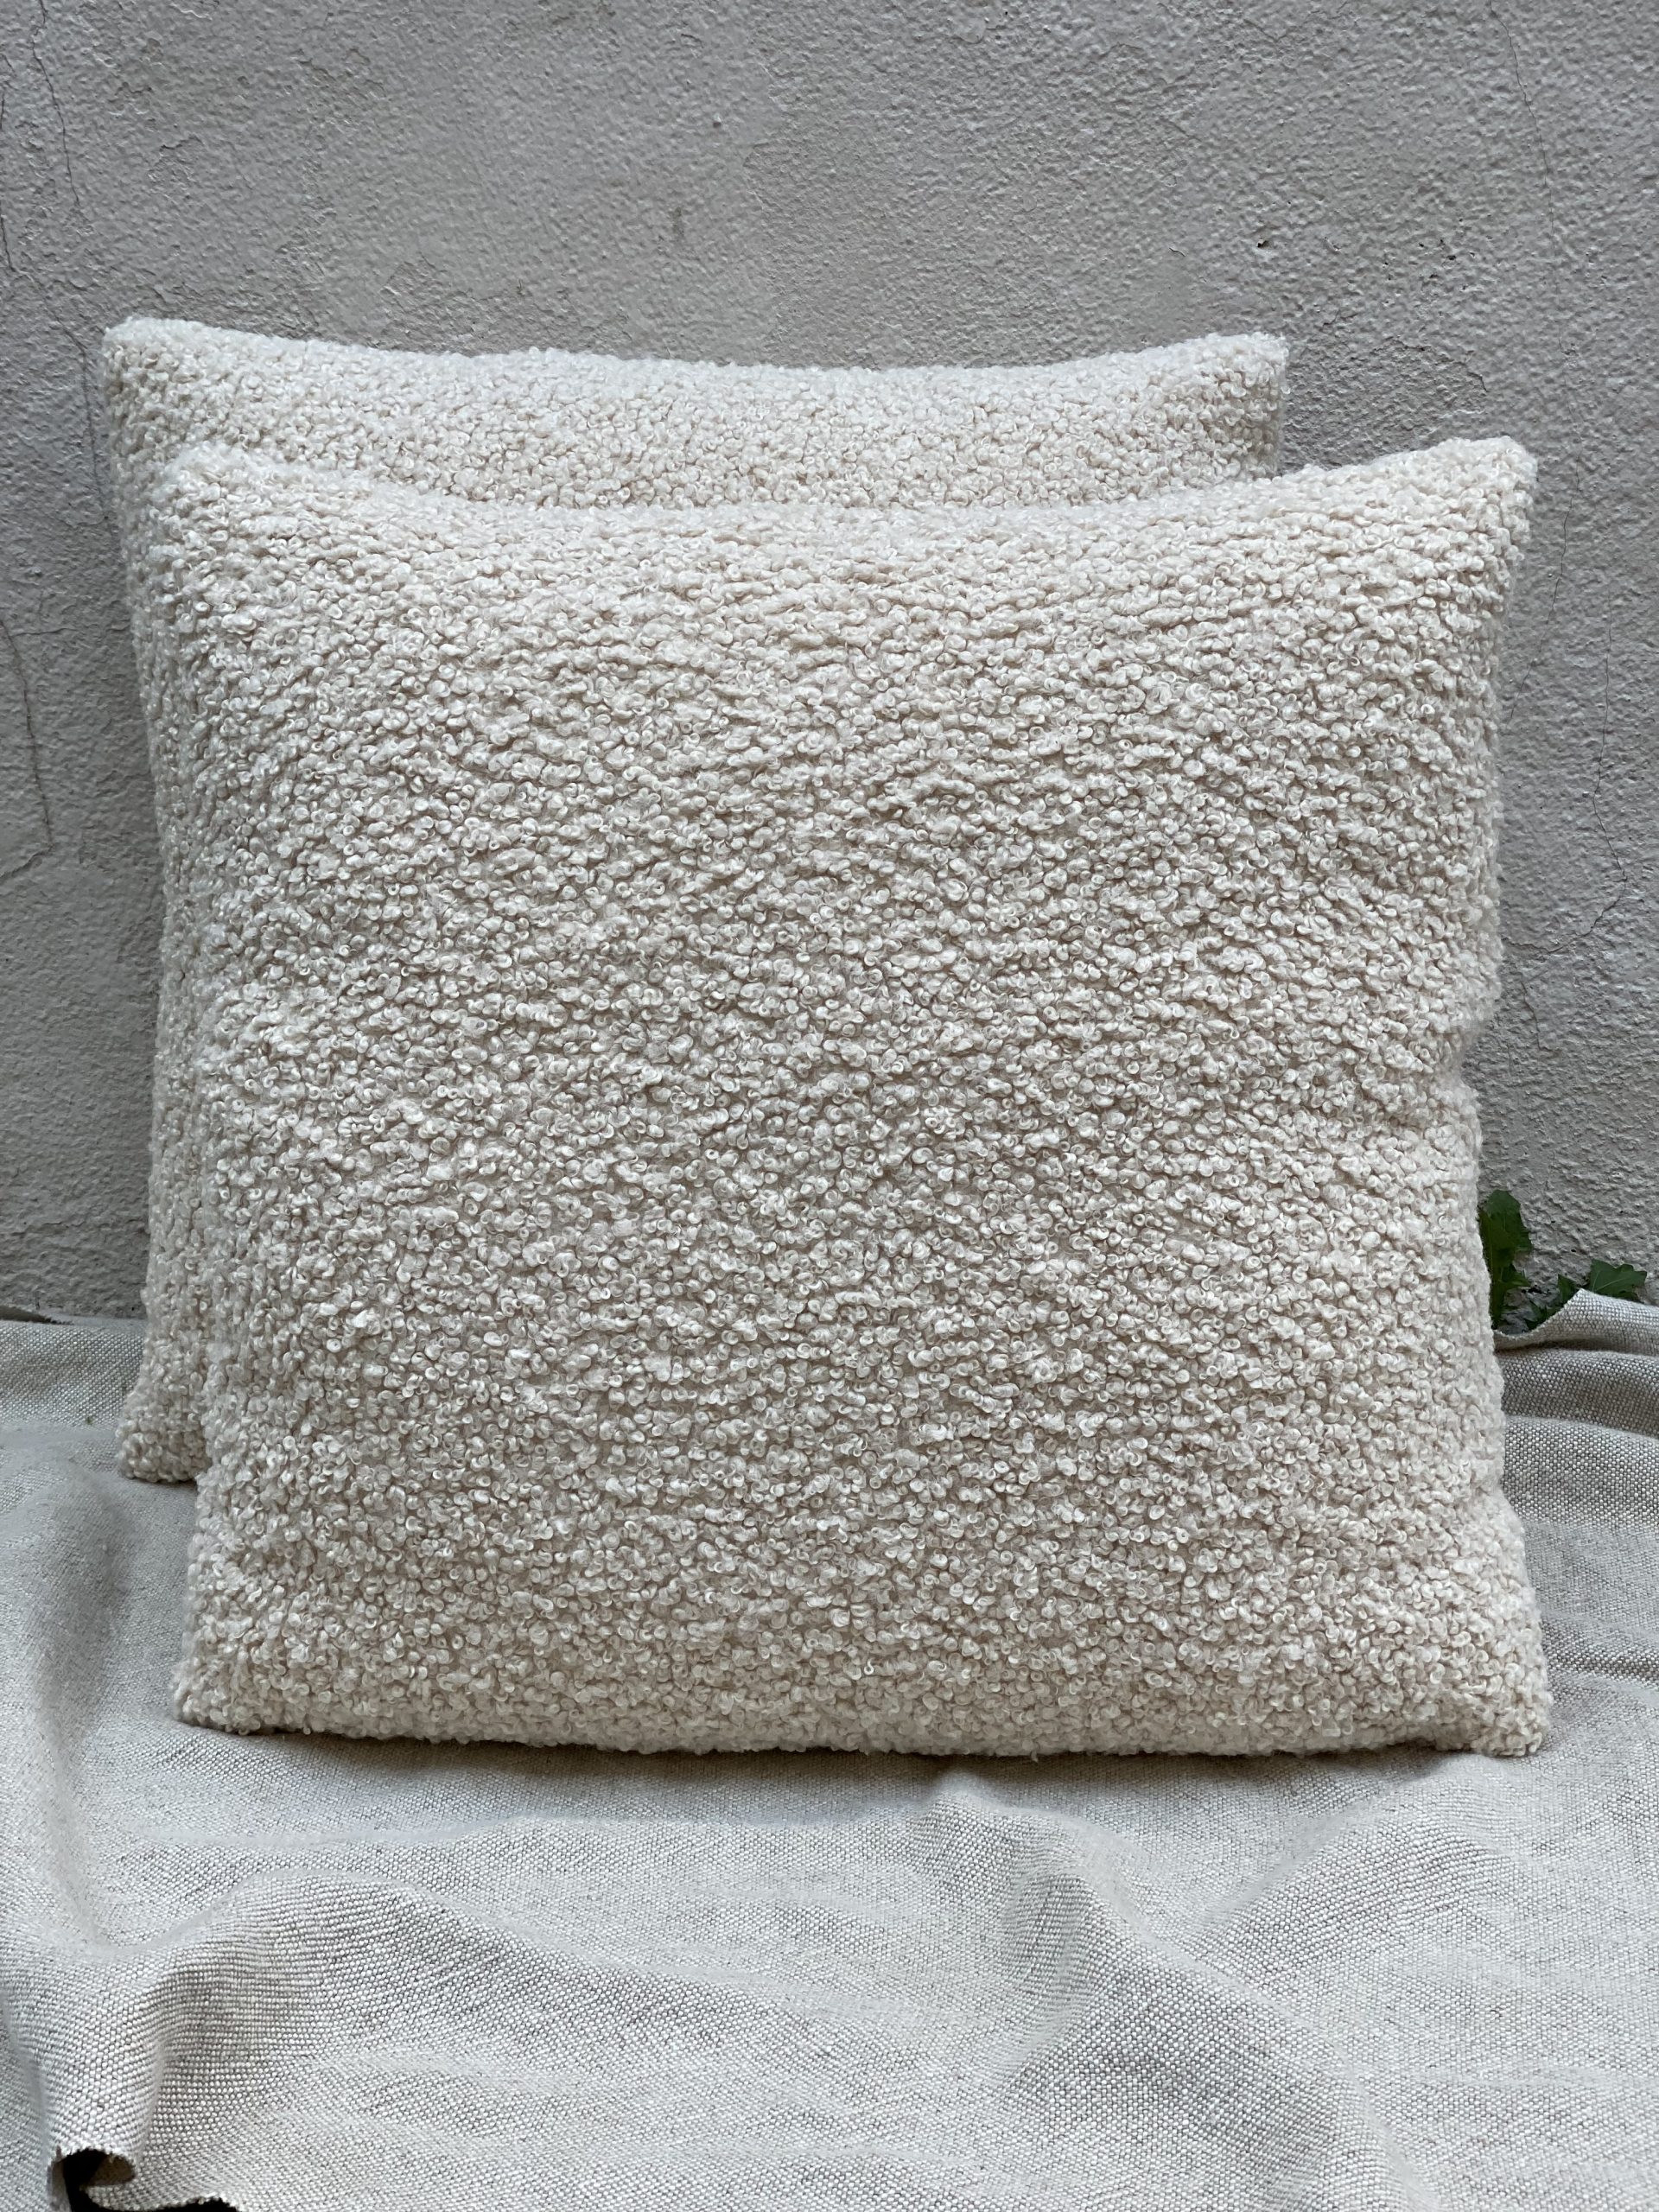 Fuzzy Pillows